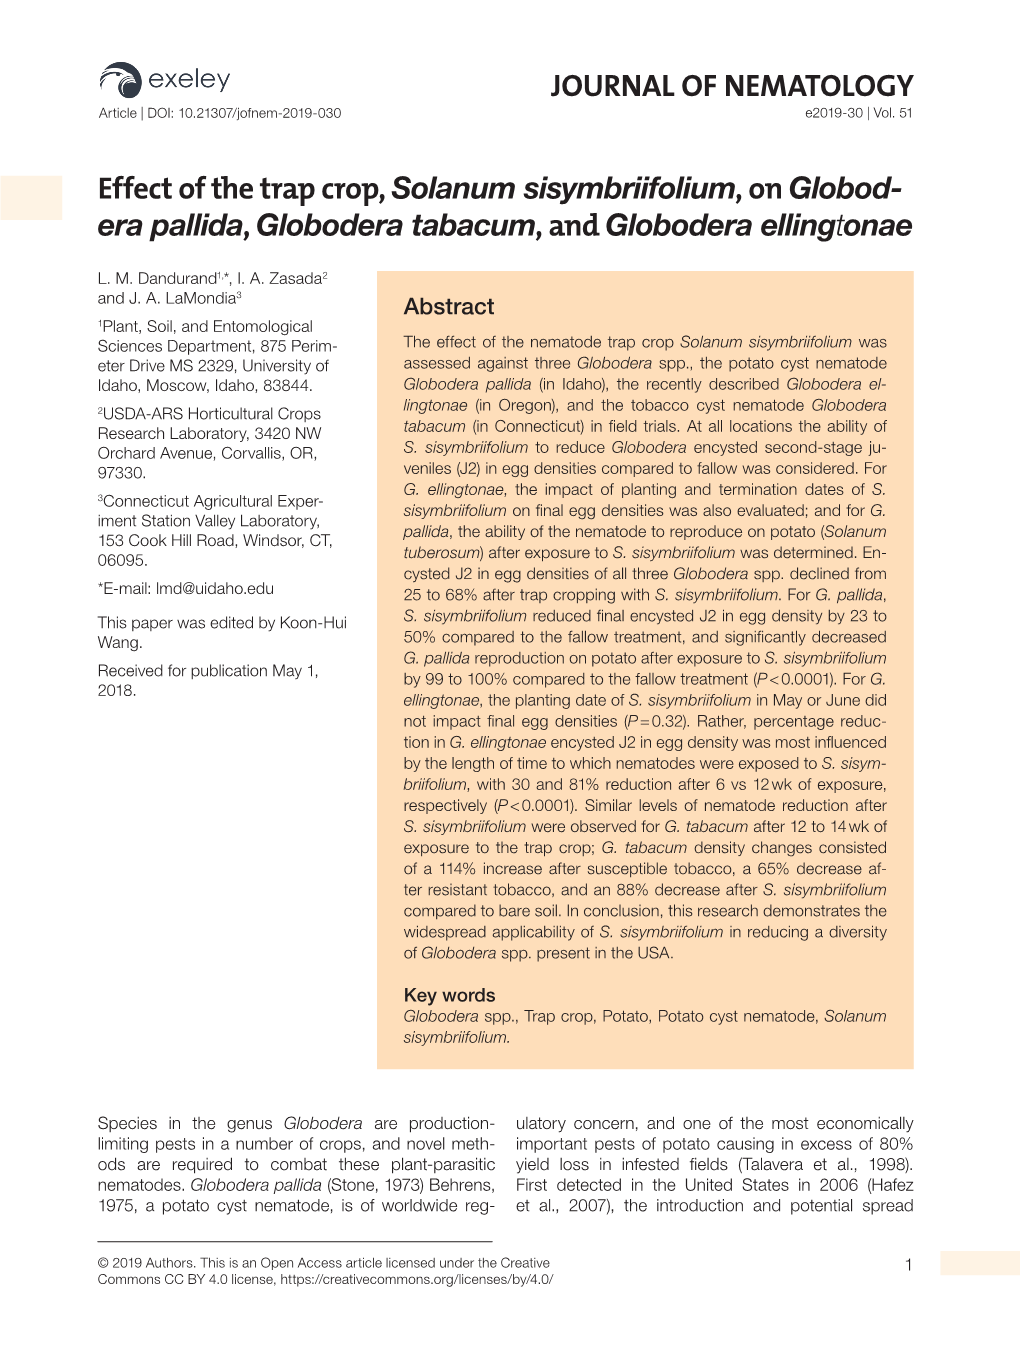 Effect of the Trap Crop, Solanum Sisymbriifolium, on Globod- Era Pallida, Globodera Tabacum, and Globodera Ellingtonae